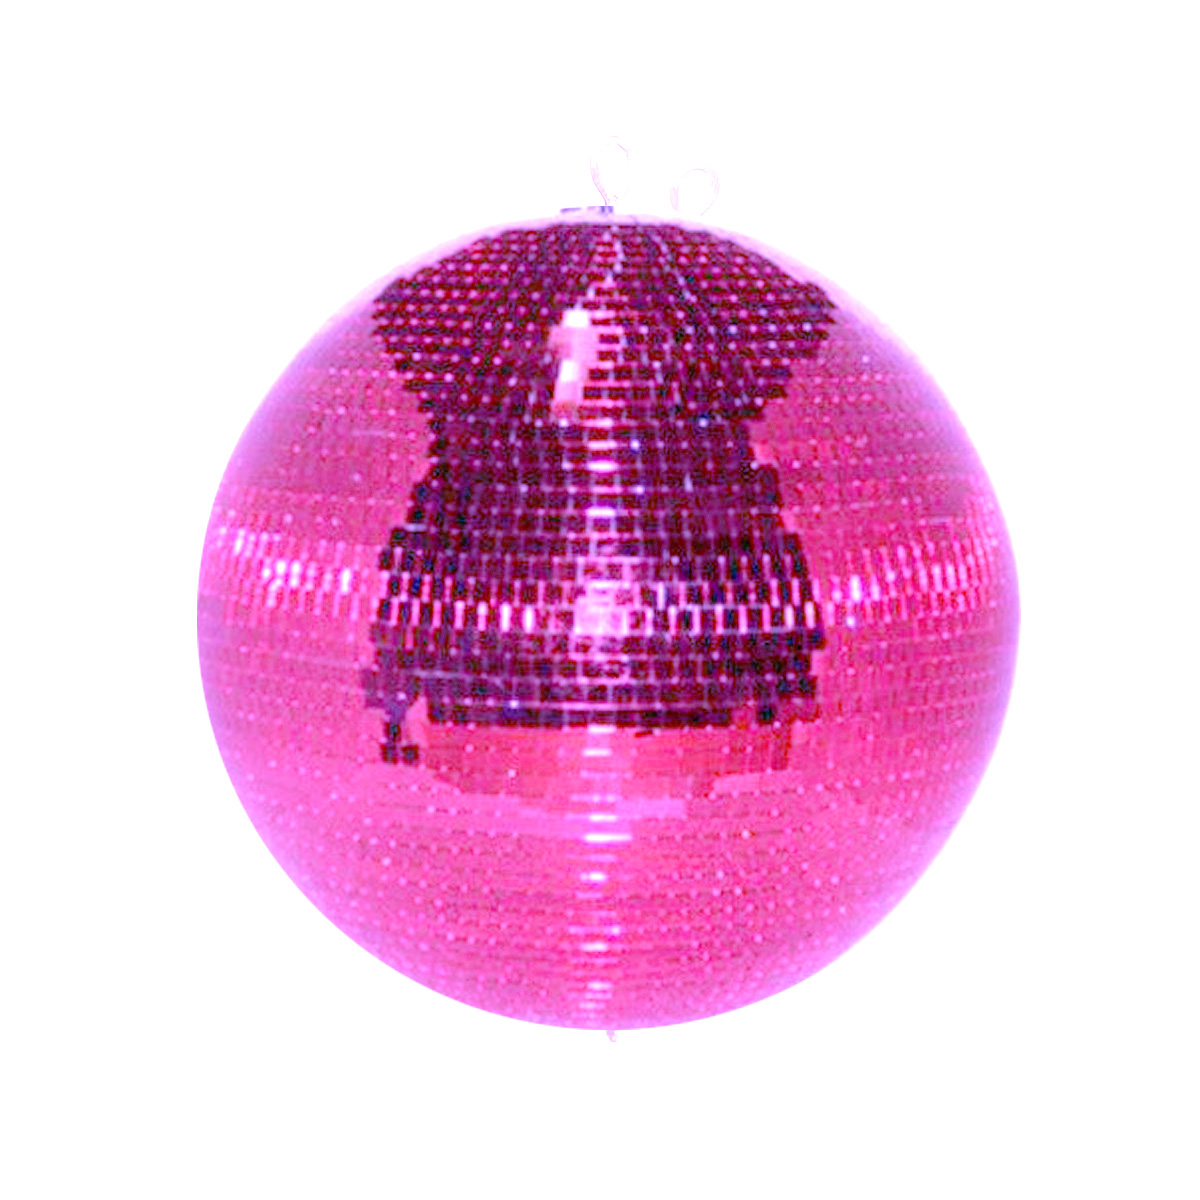 Spiegelkugel 50cm pink rosa purple- Diskokugel (Discokugel) Party Lichteffekt - Echtglas - mirrorball safety pink color